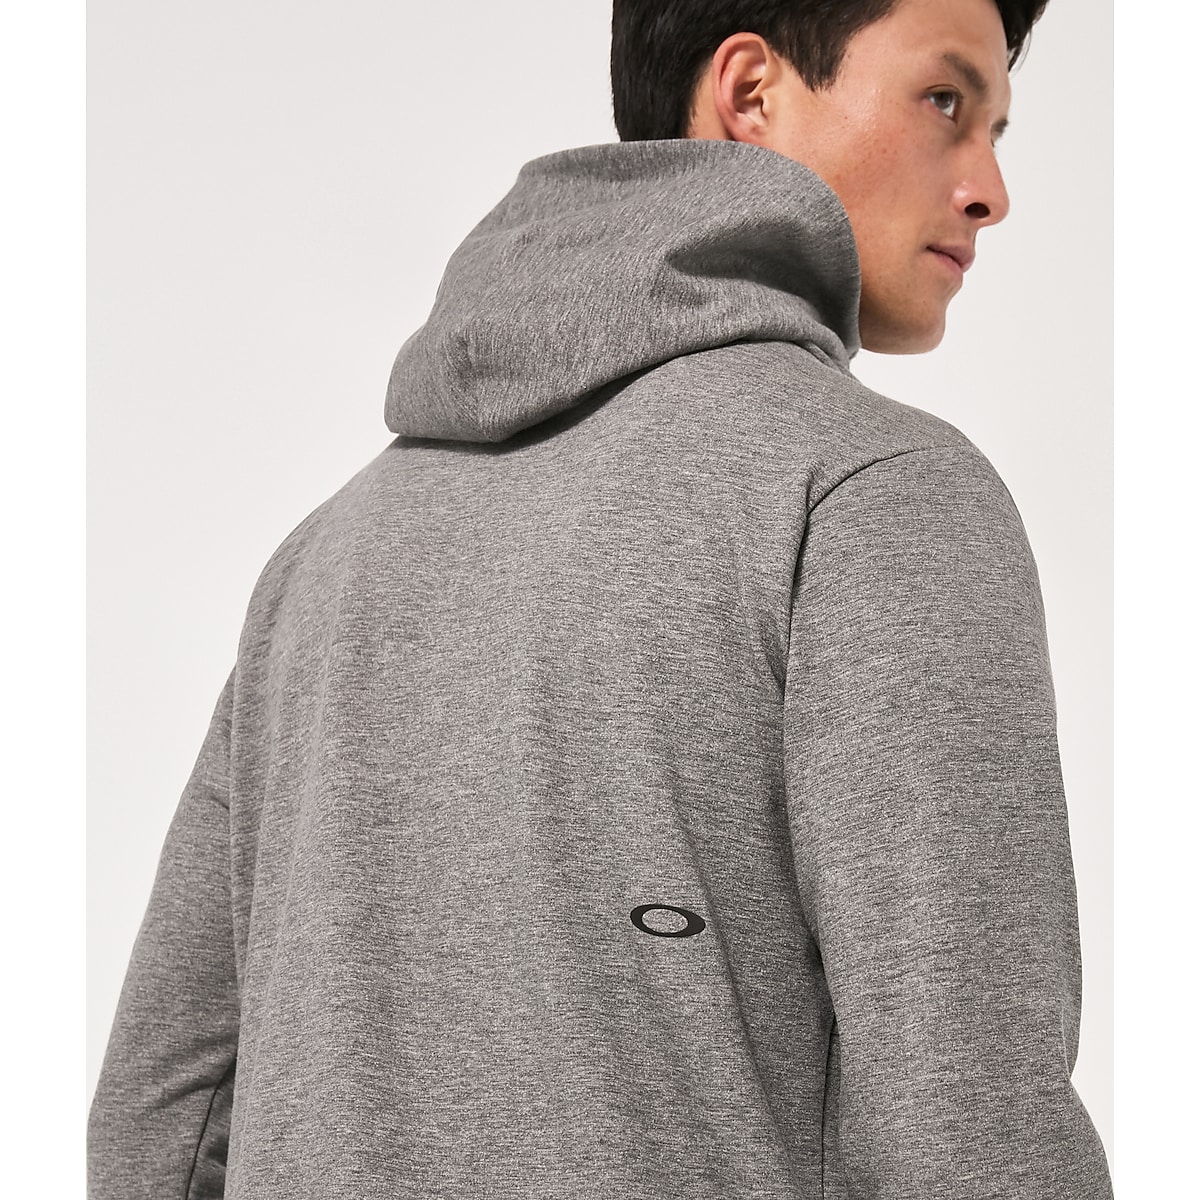 Oakley Rs Veil Pliable Fleece Jacket - New Athletic Grey | Oakley